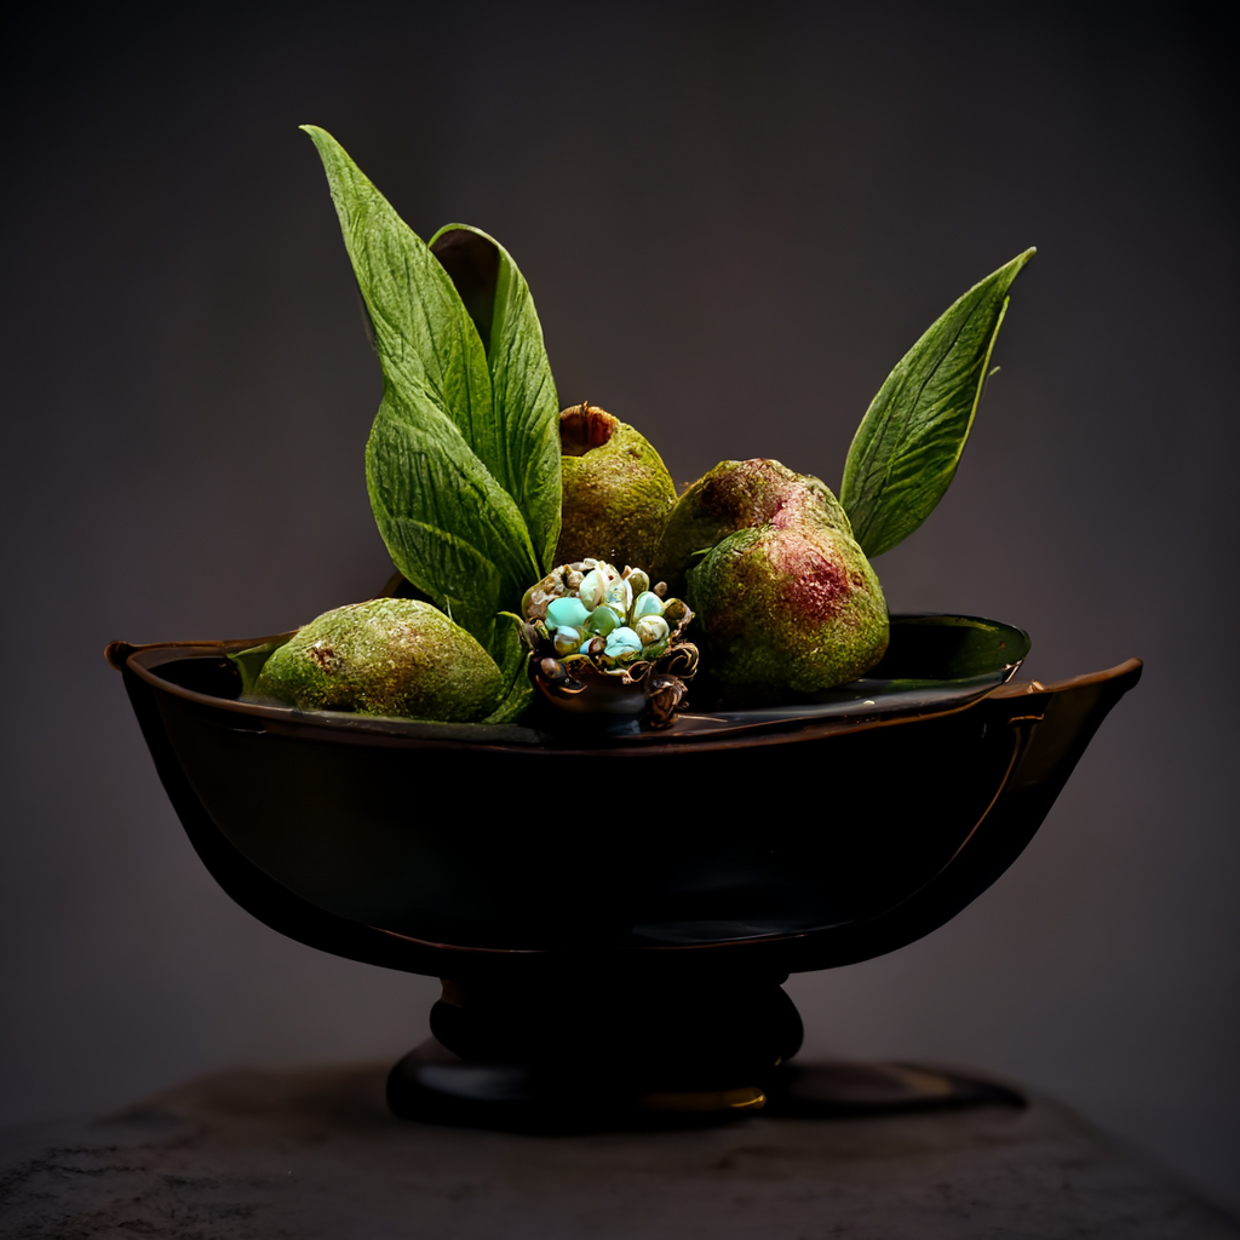 pears10